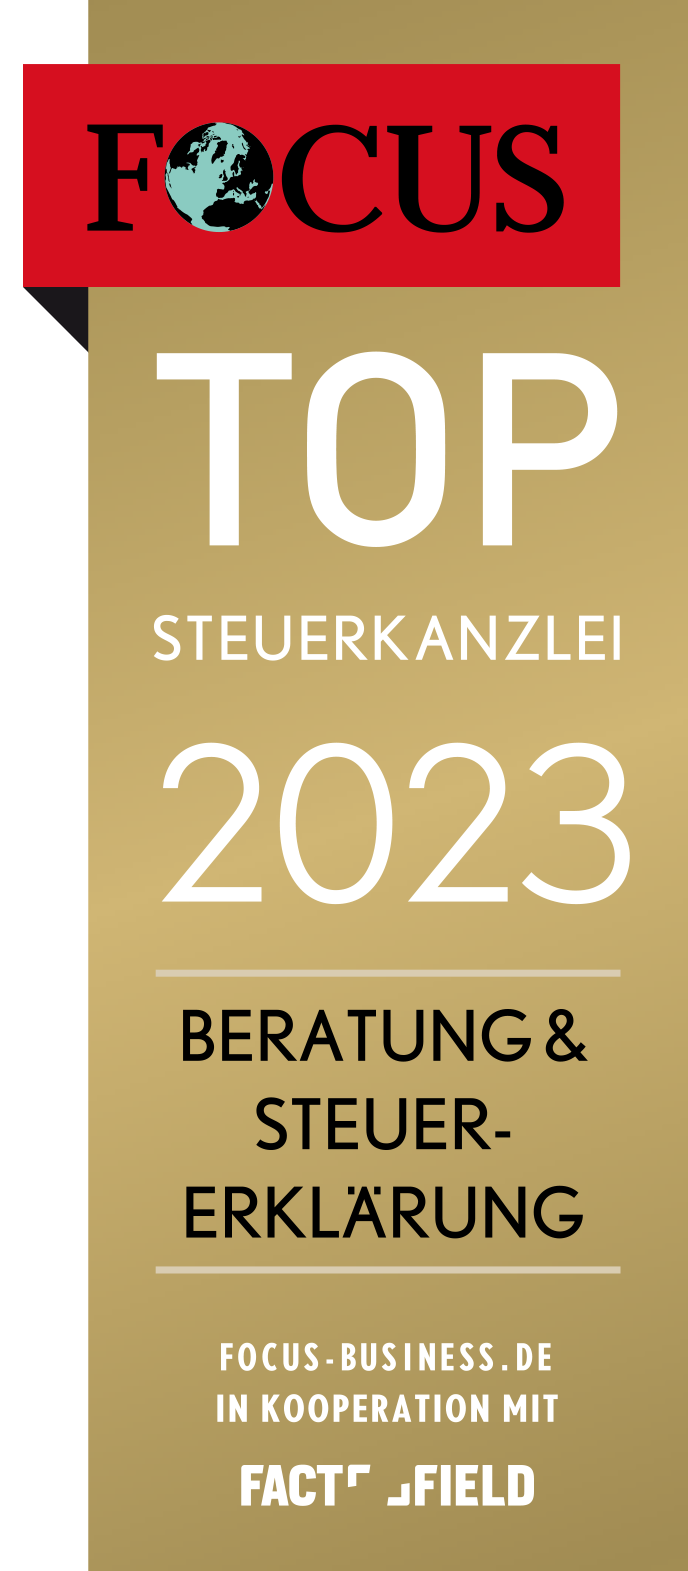 Focus TOP Steuerberater Logo